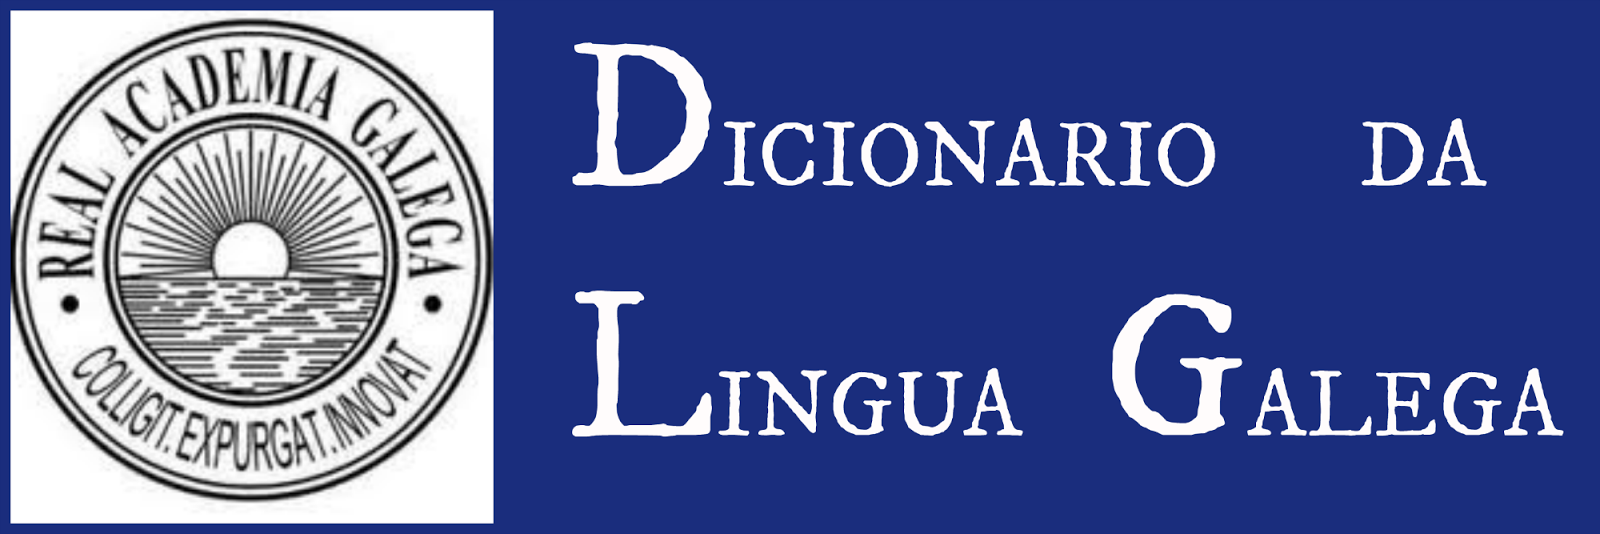 Dicionario da Lingua Galega